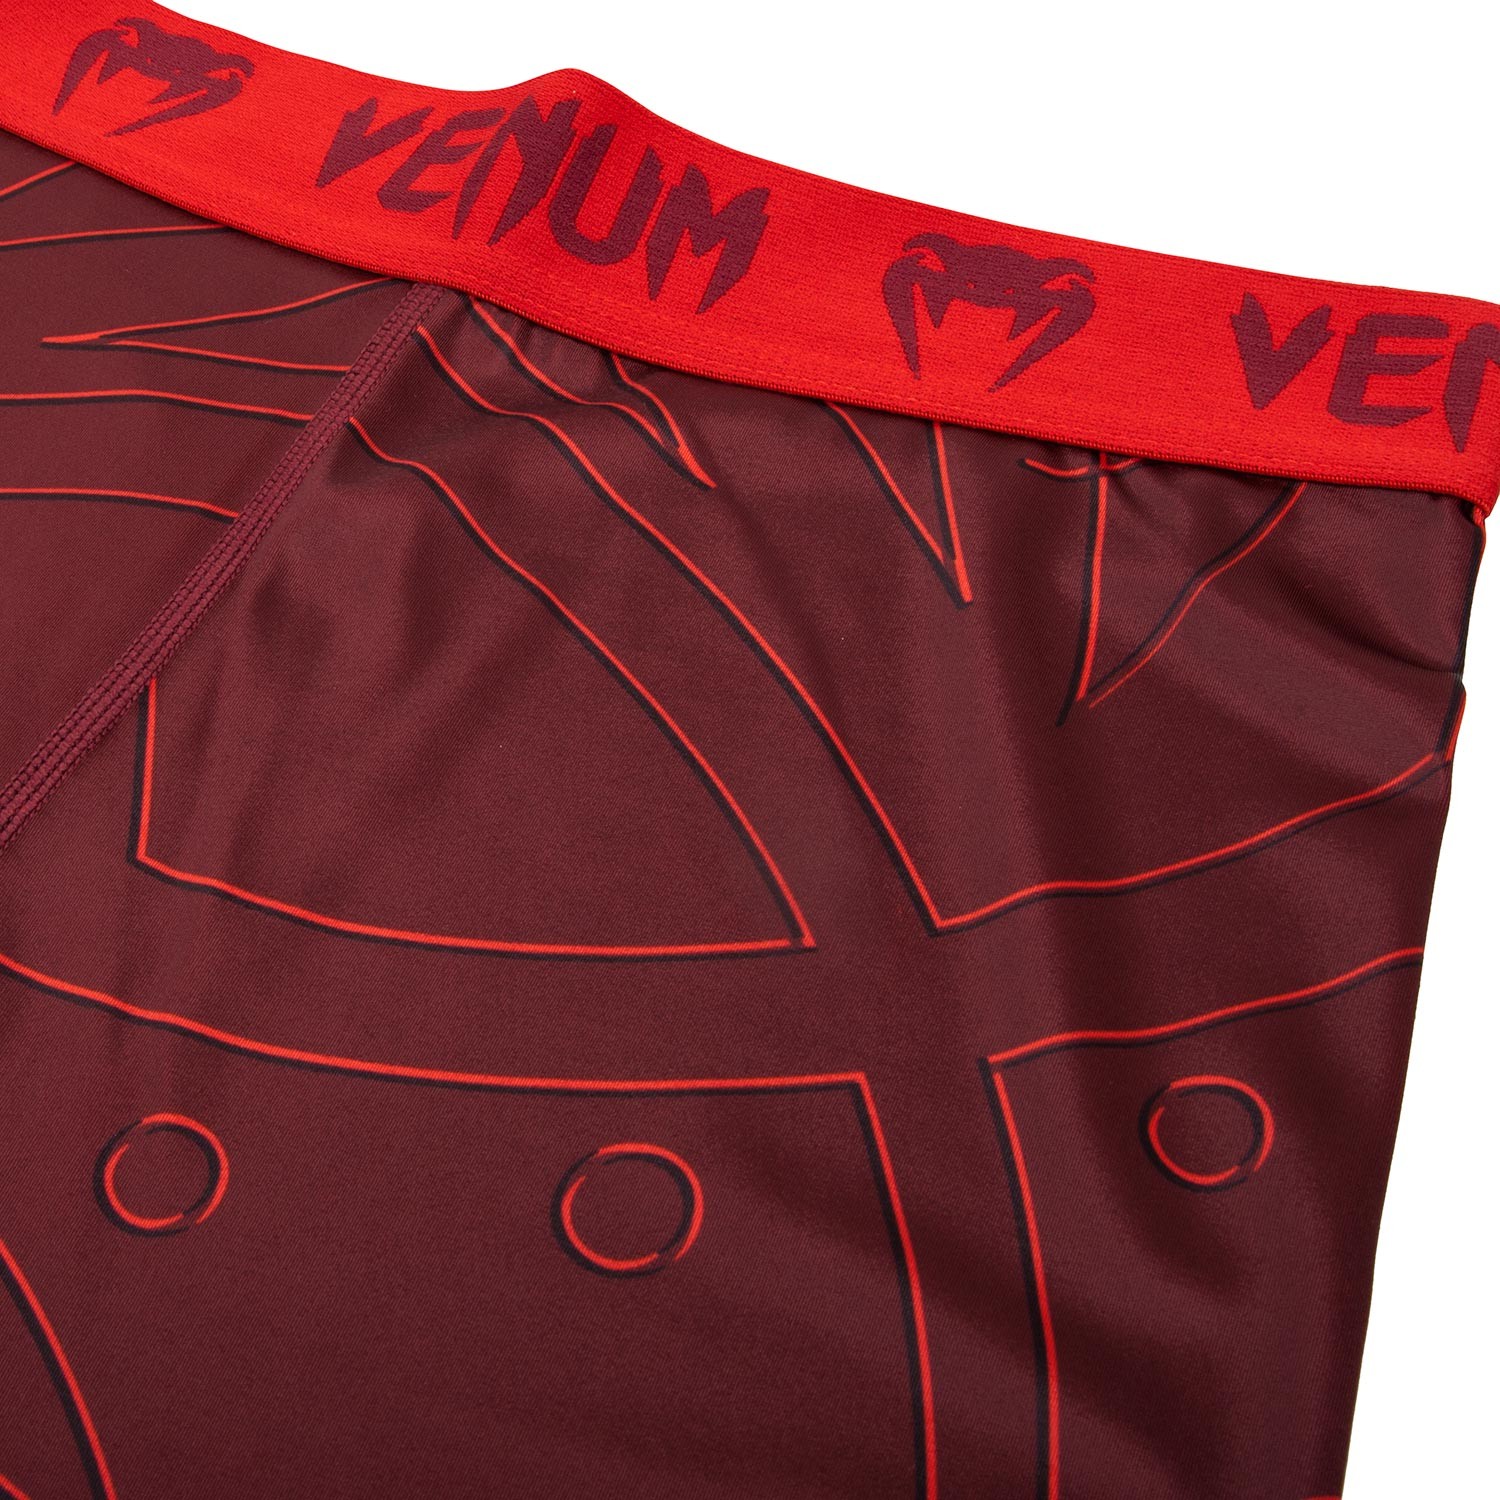 Компрессионные штаны Venum Nightcrawler Red